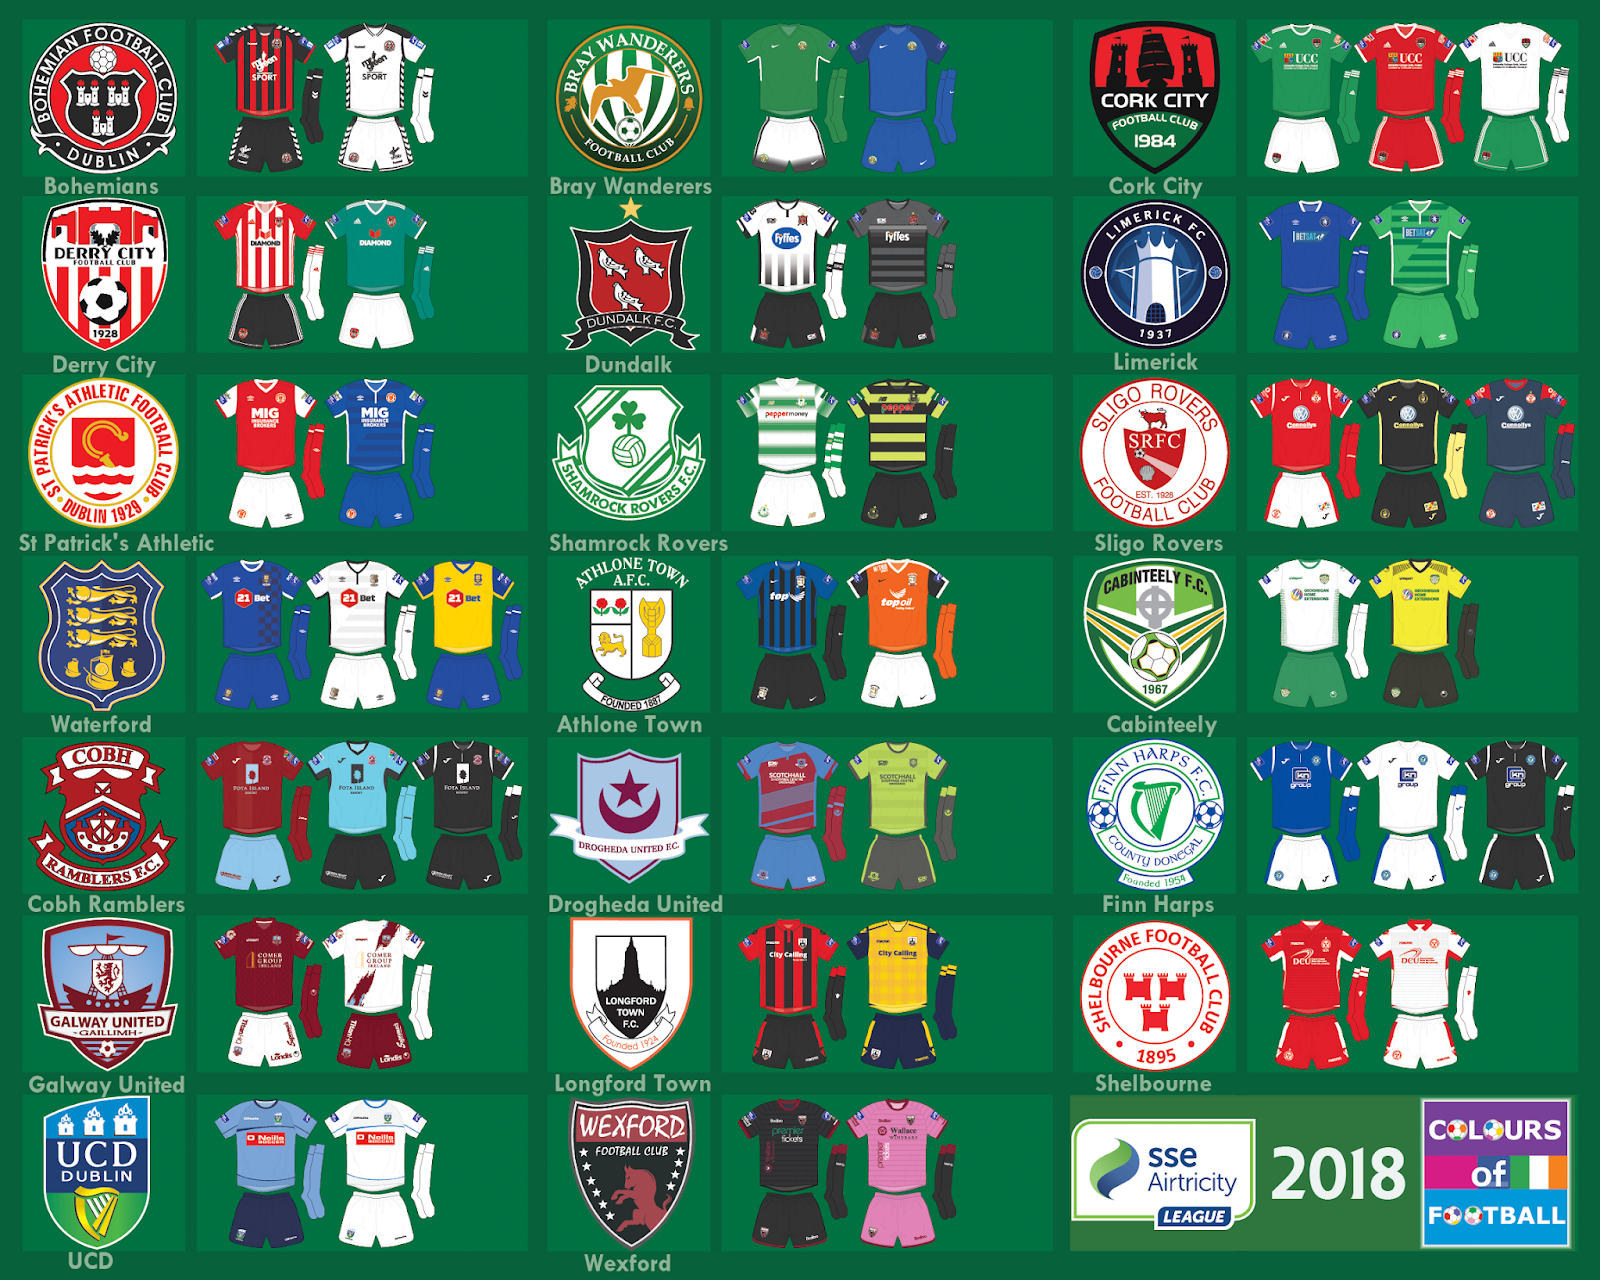 World Football Badges News: Ireland - 2018 League of Ireland Premier ...